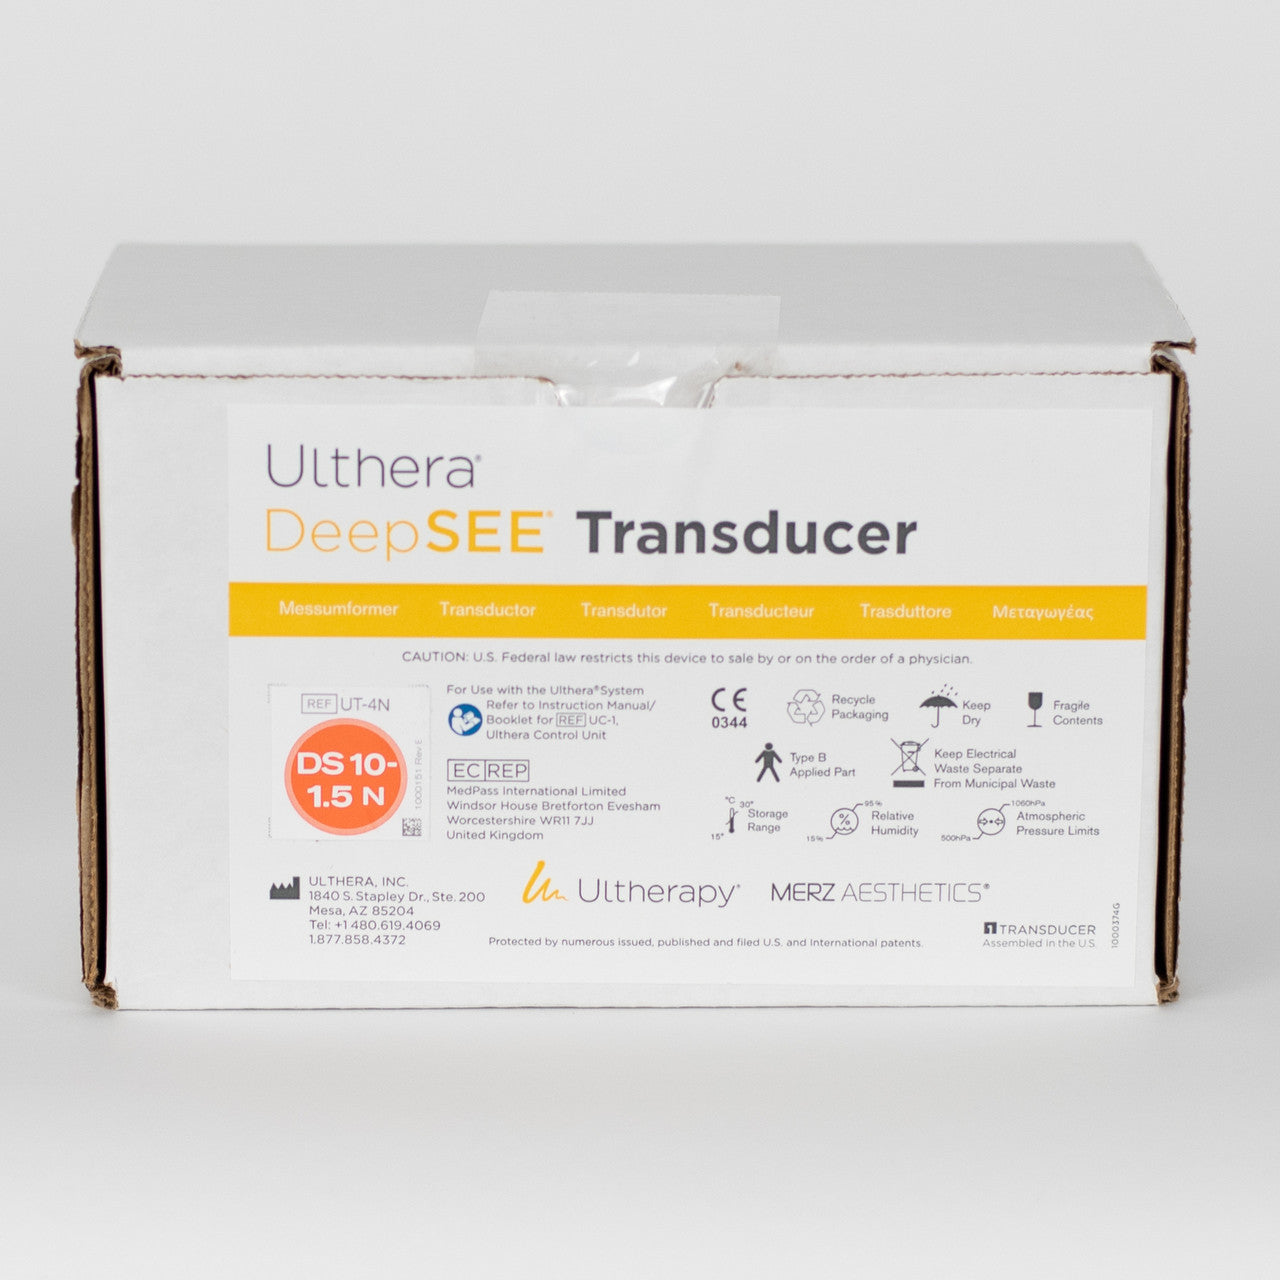 Ulthera DeepSEE DS 10 - 1.5 Narrow (Orange) Transducer